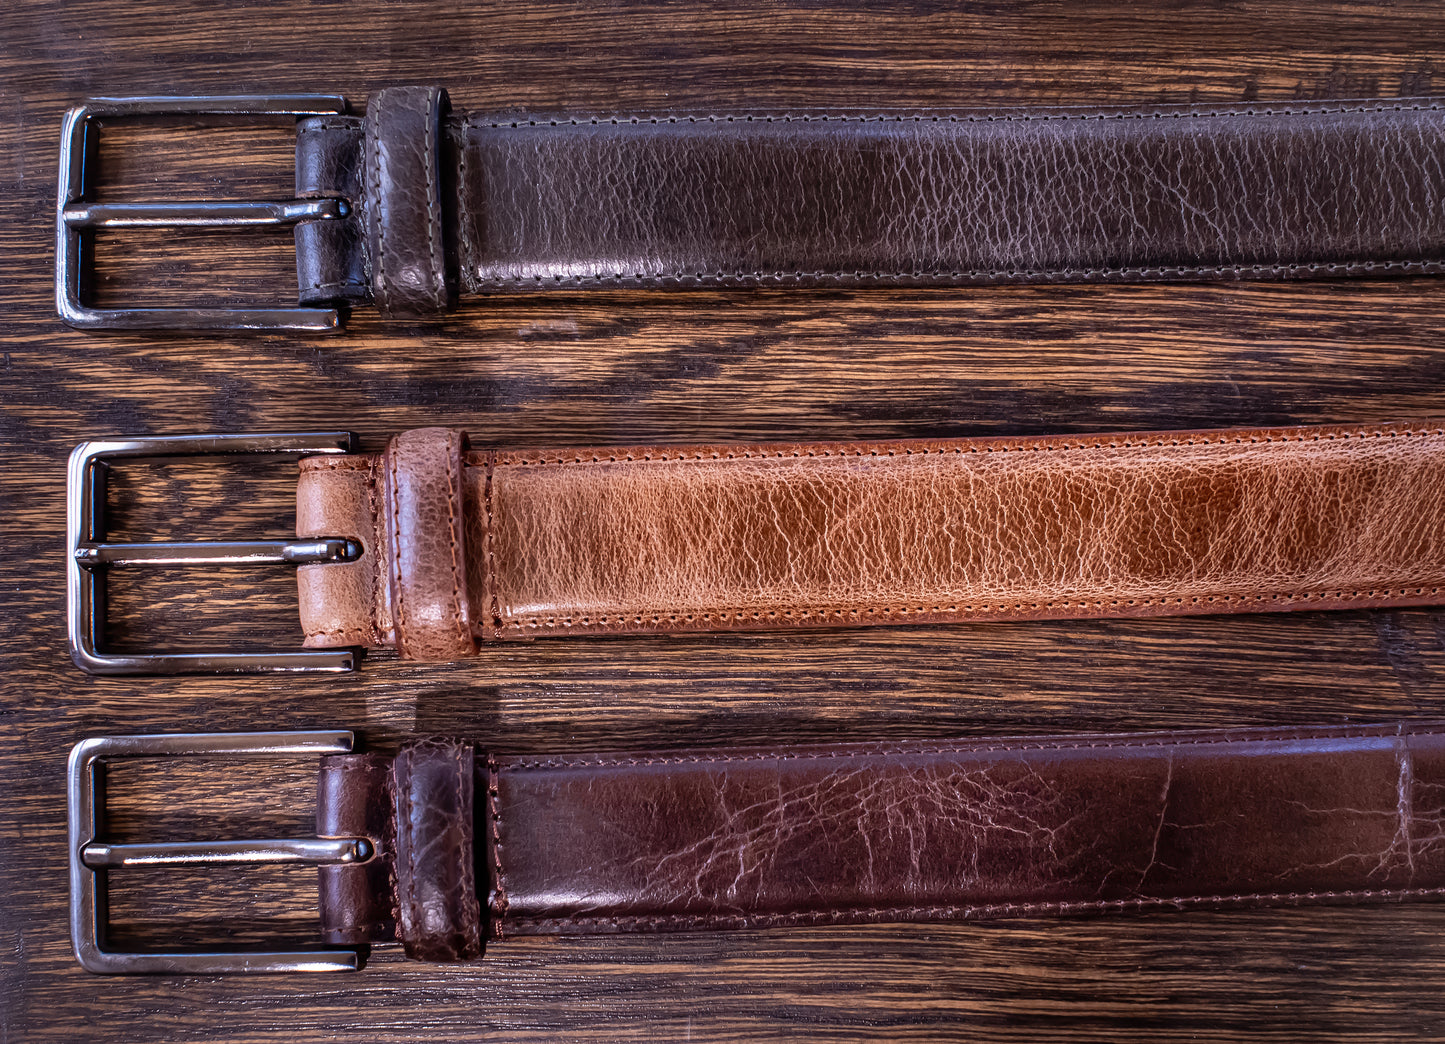 Buffalo Leather Glazed Finish Dress Belts - 3 Colors